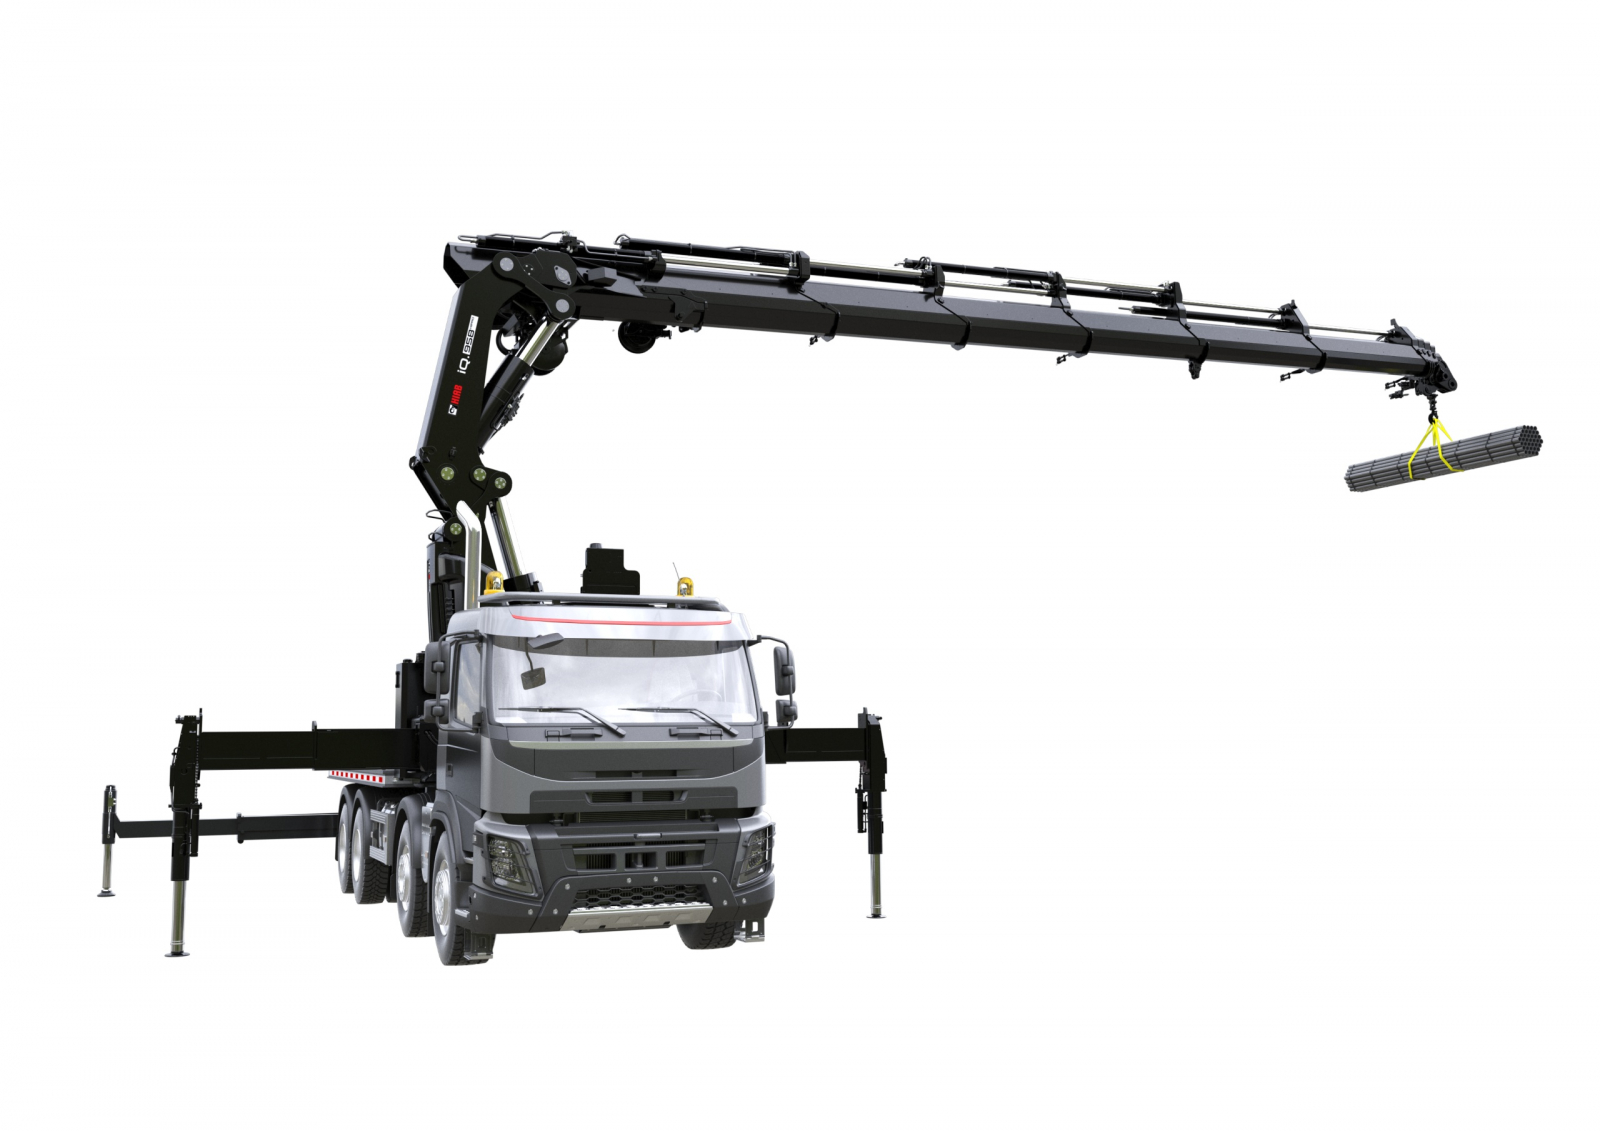 Introducing three new HIAB heavy-range loader cranes